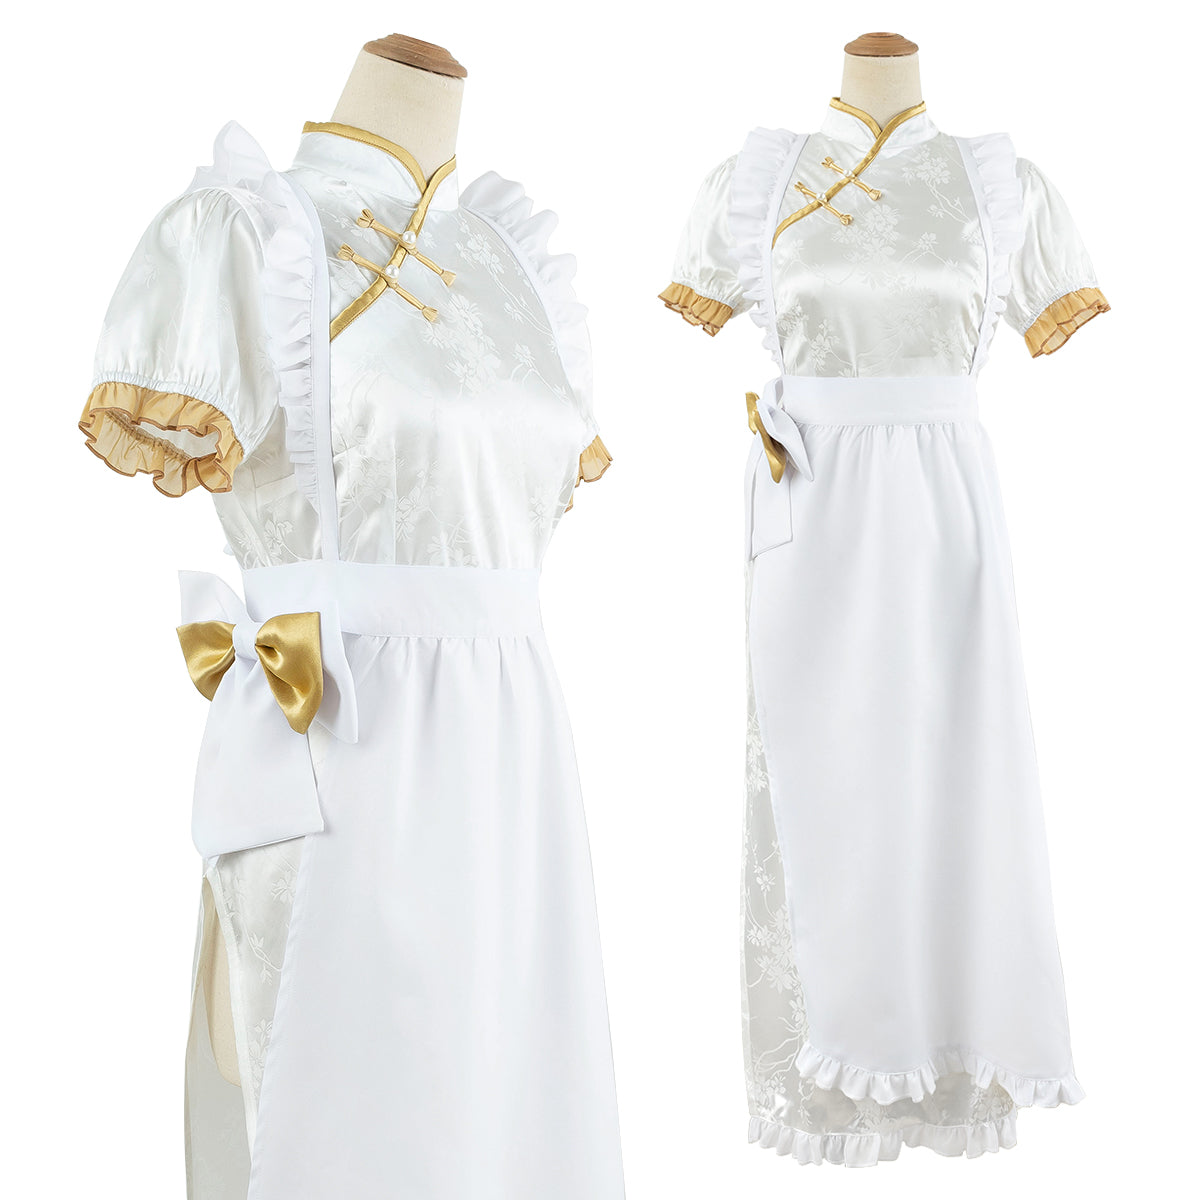 HOLOUN Lolita Maid Dress Skirt China Costume Cute Cheongsam Cafe Uniform Apron White Color Short Sleeve Daily Wear Gift